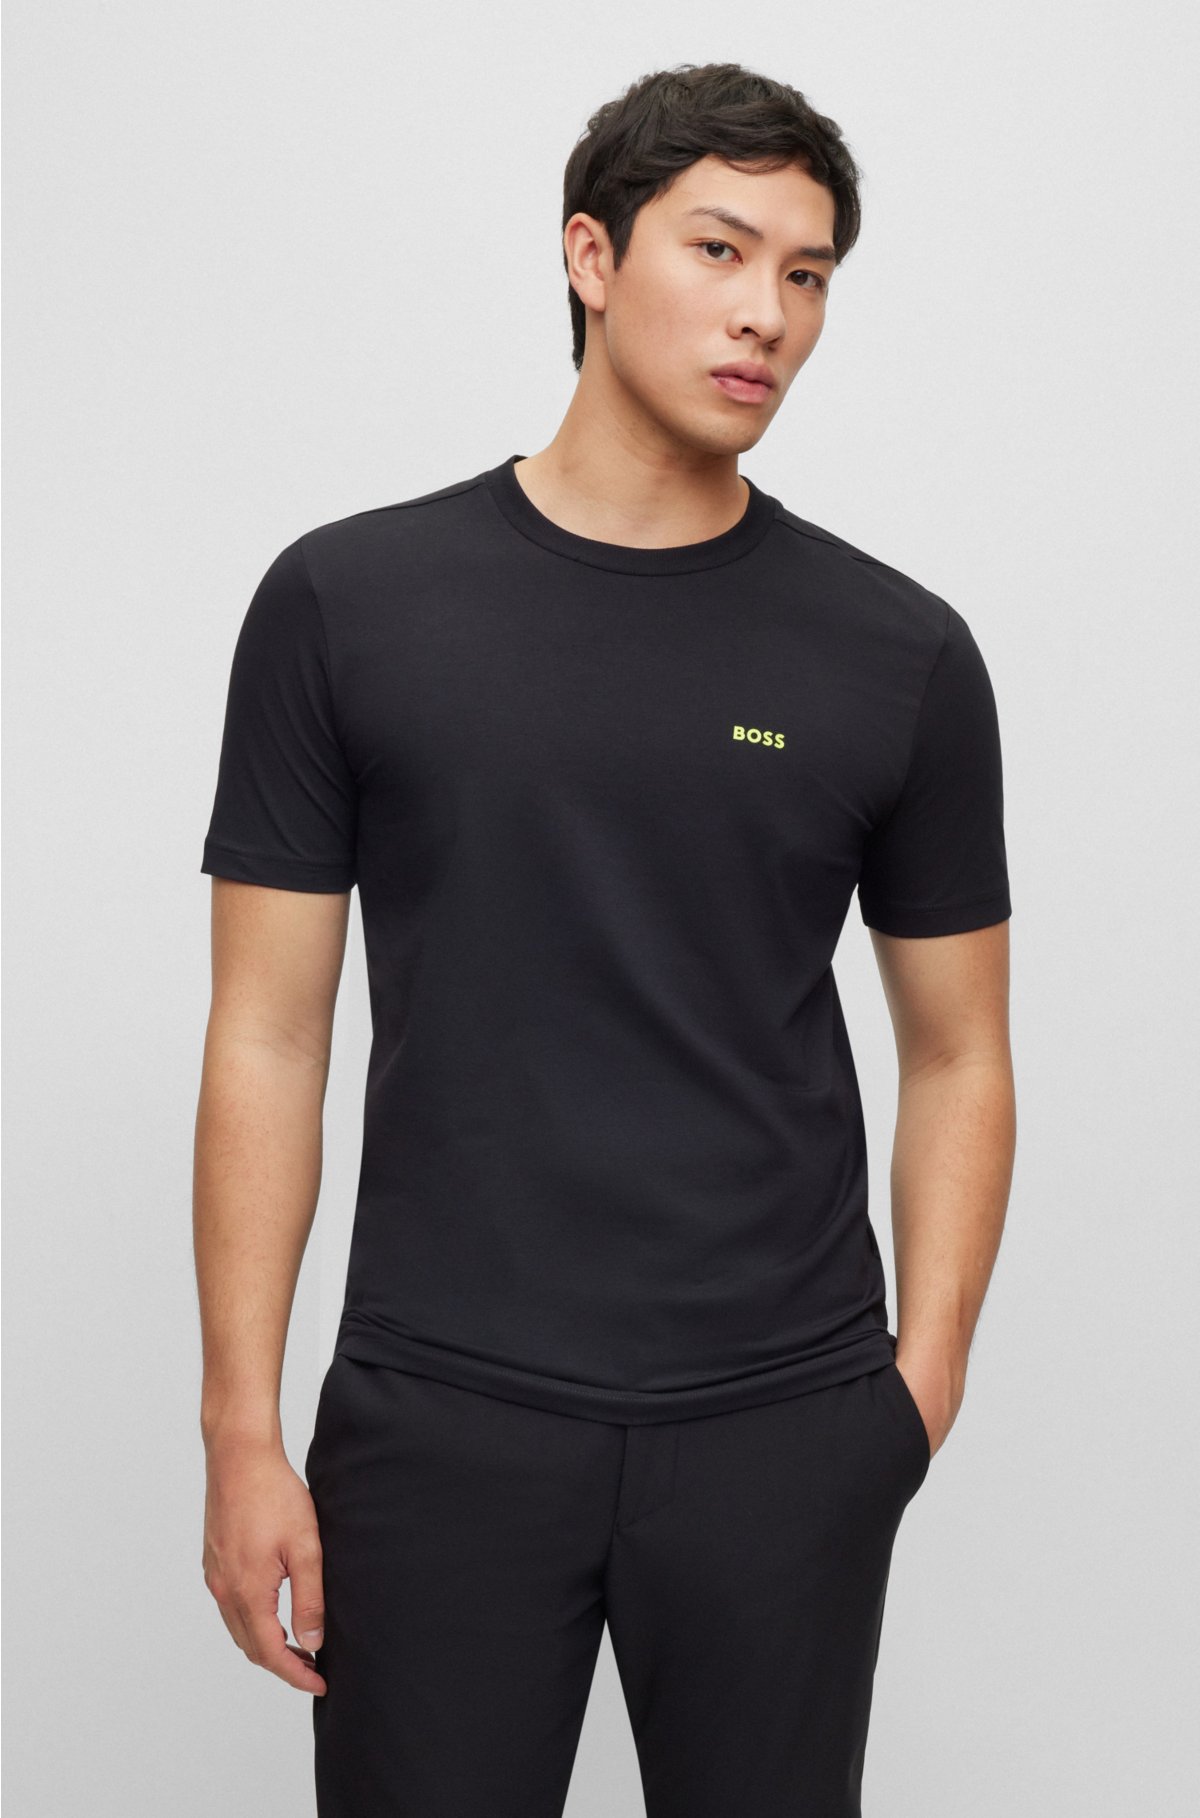 Bodyshaper Blusa T-Shirt Lace Nylon-Spandex Ref: Niza – AddaCollection